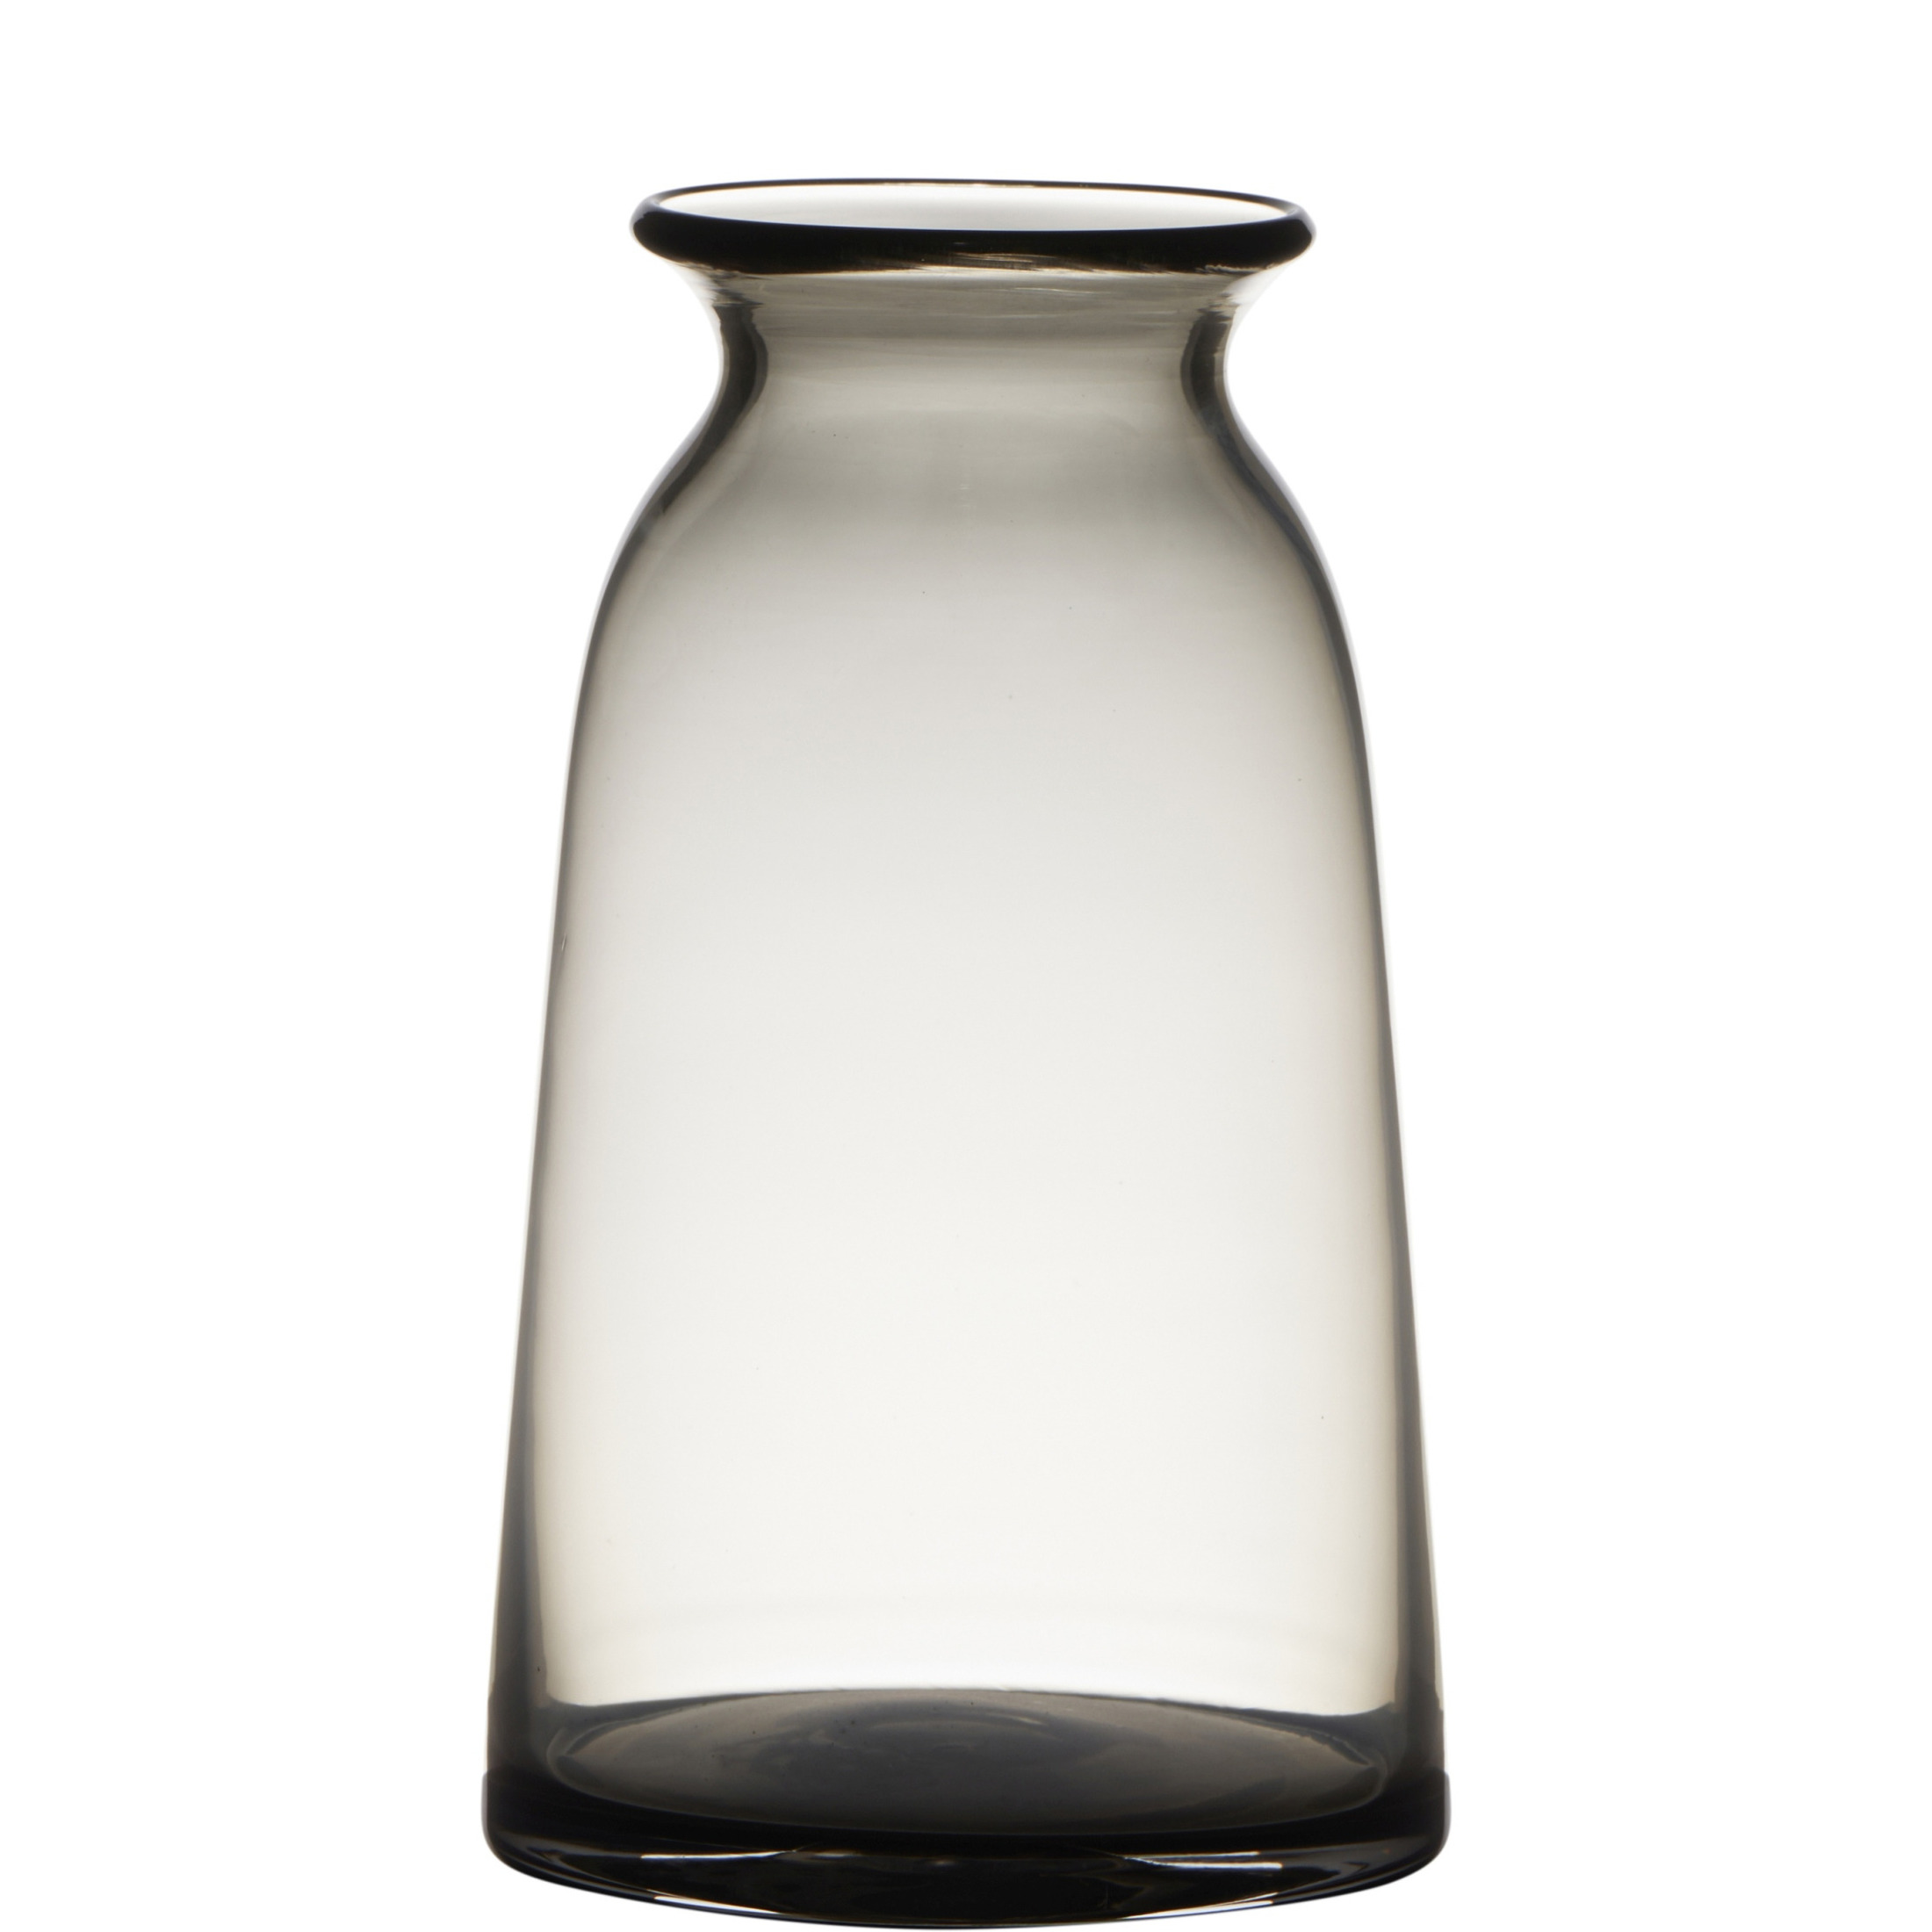 Merkloos Transparante home-basics grijze glazen vaas/vazen 23.5 x 12.5 cm -